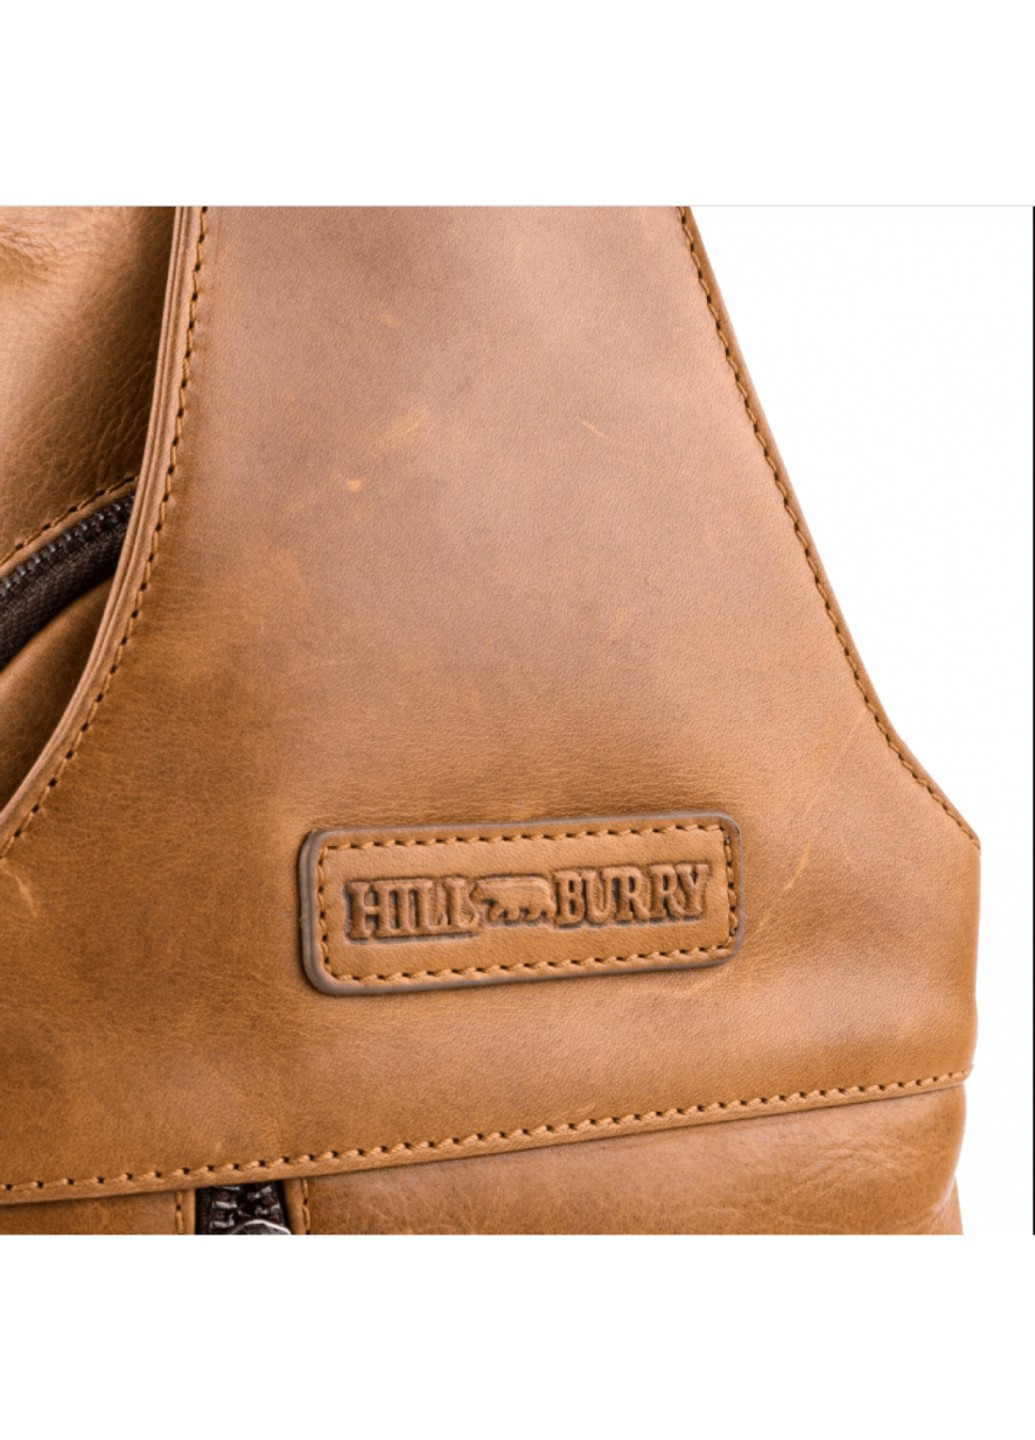 Мужская кожаная сумка-слинг HB6101 HILL BURRY (272949993)